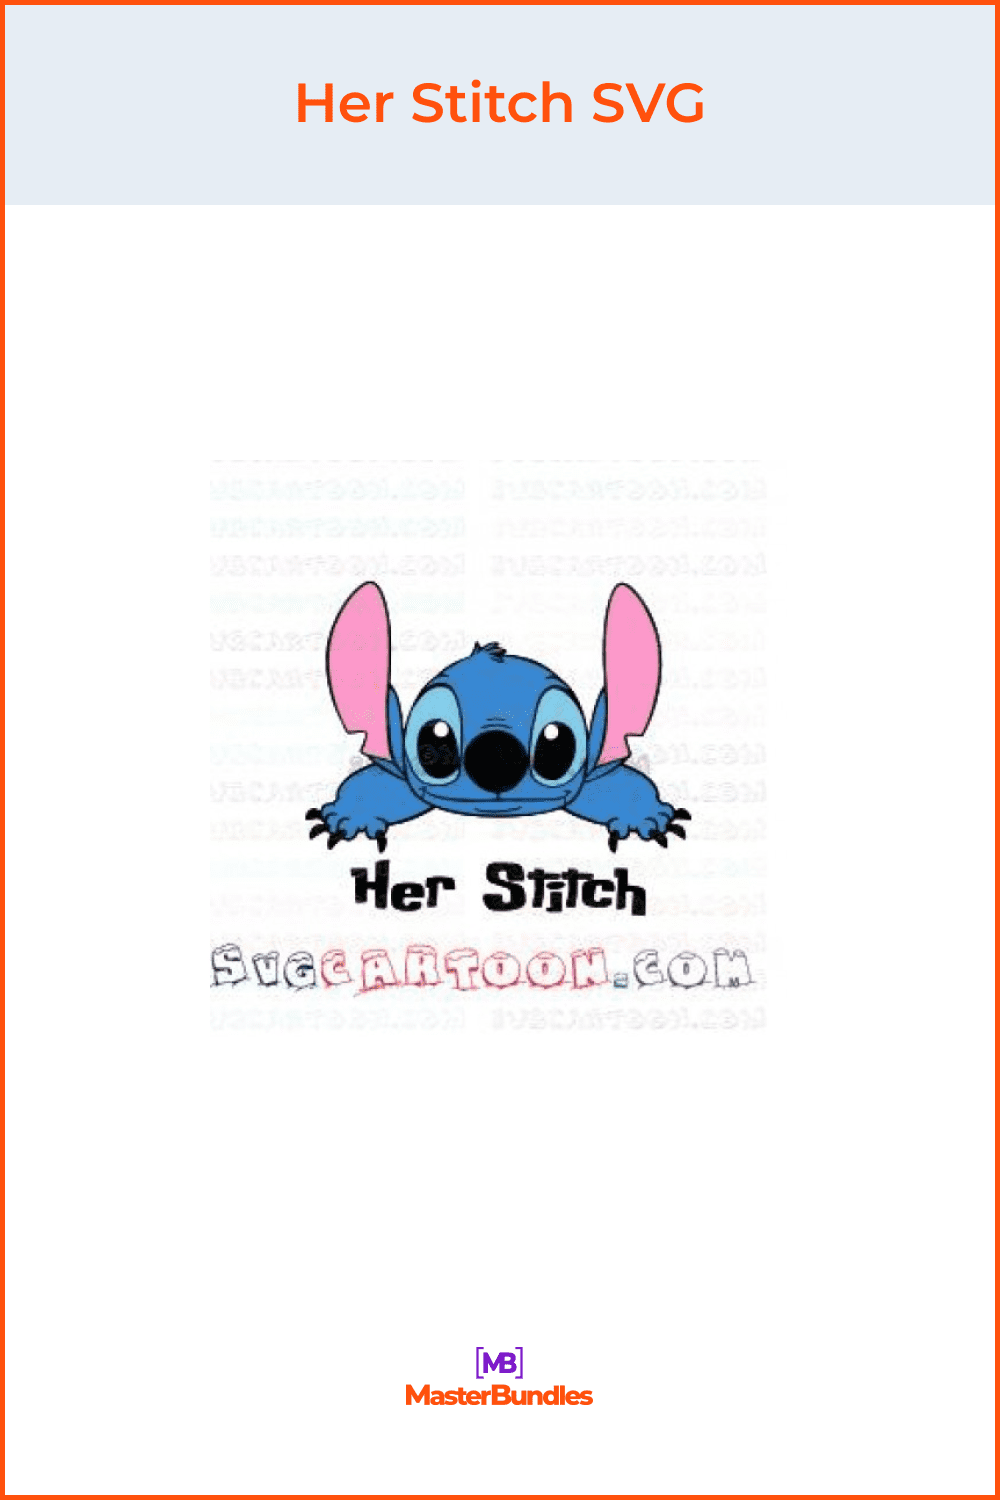 Her Stitch SVG.